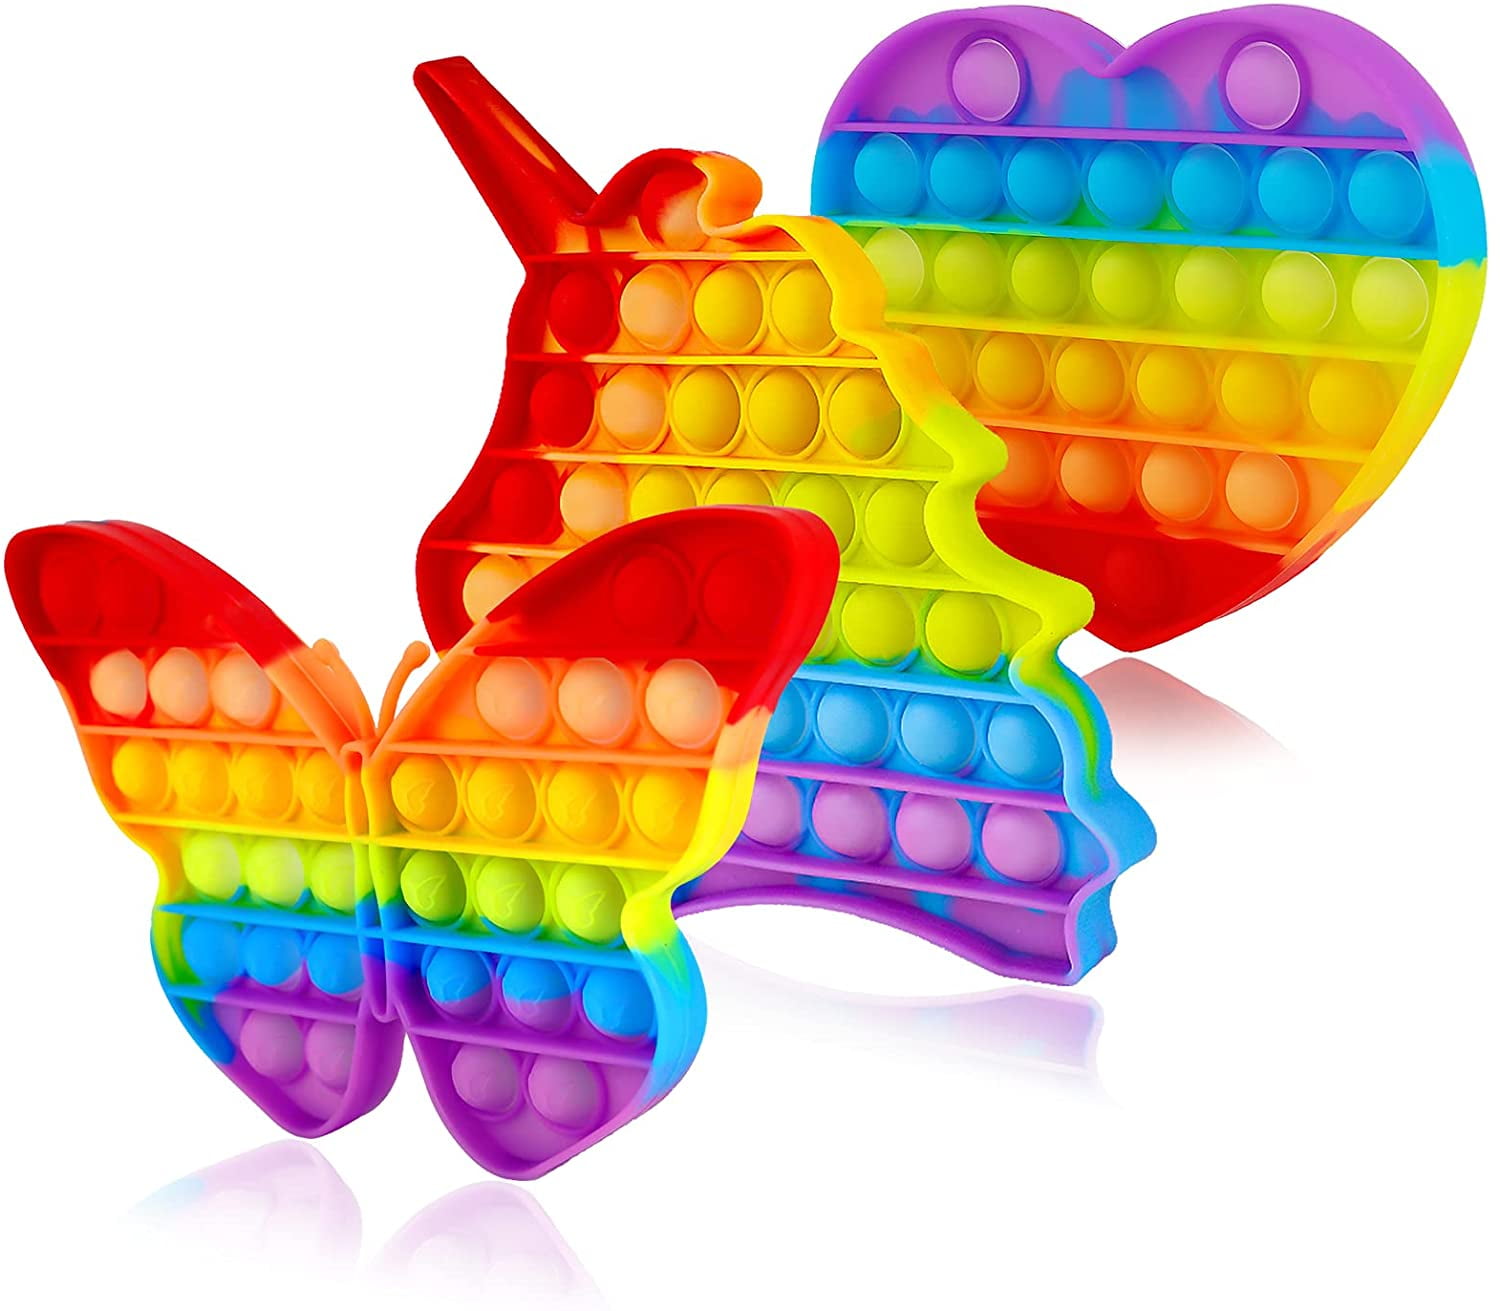 Details about   Simple Dimple batman Fidget Toy Stress Sensory Autism ADHD Special Needs Gift UK 